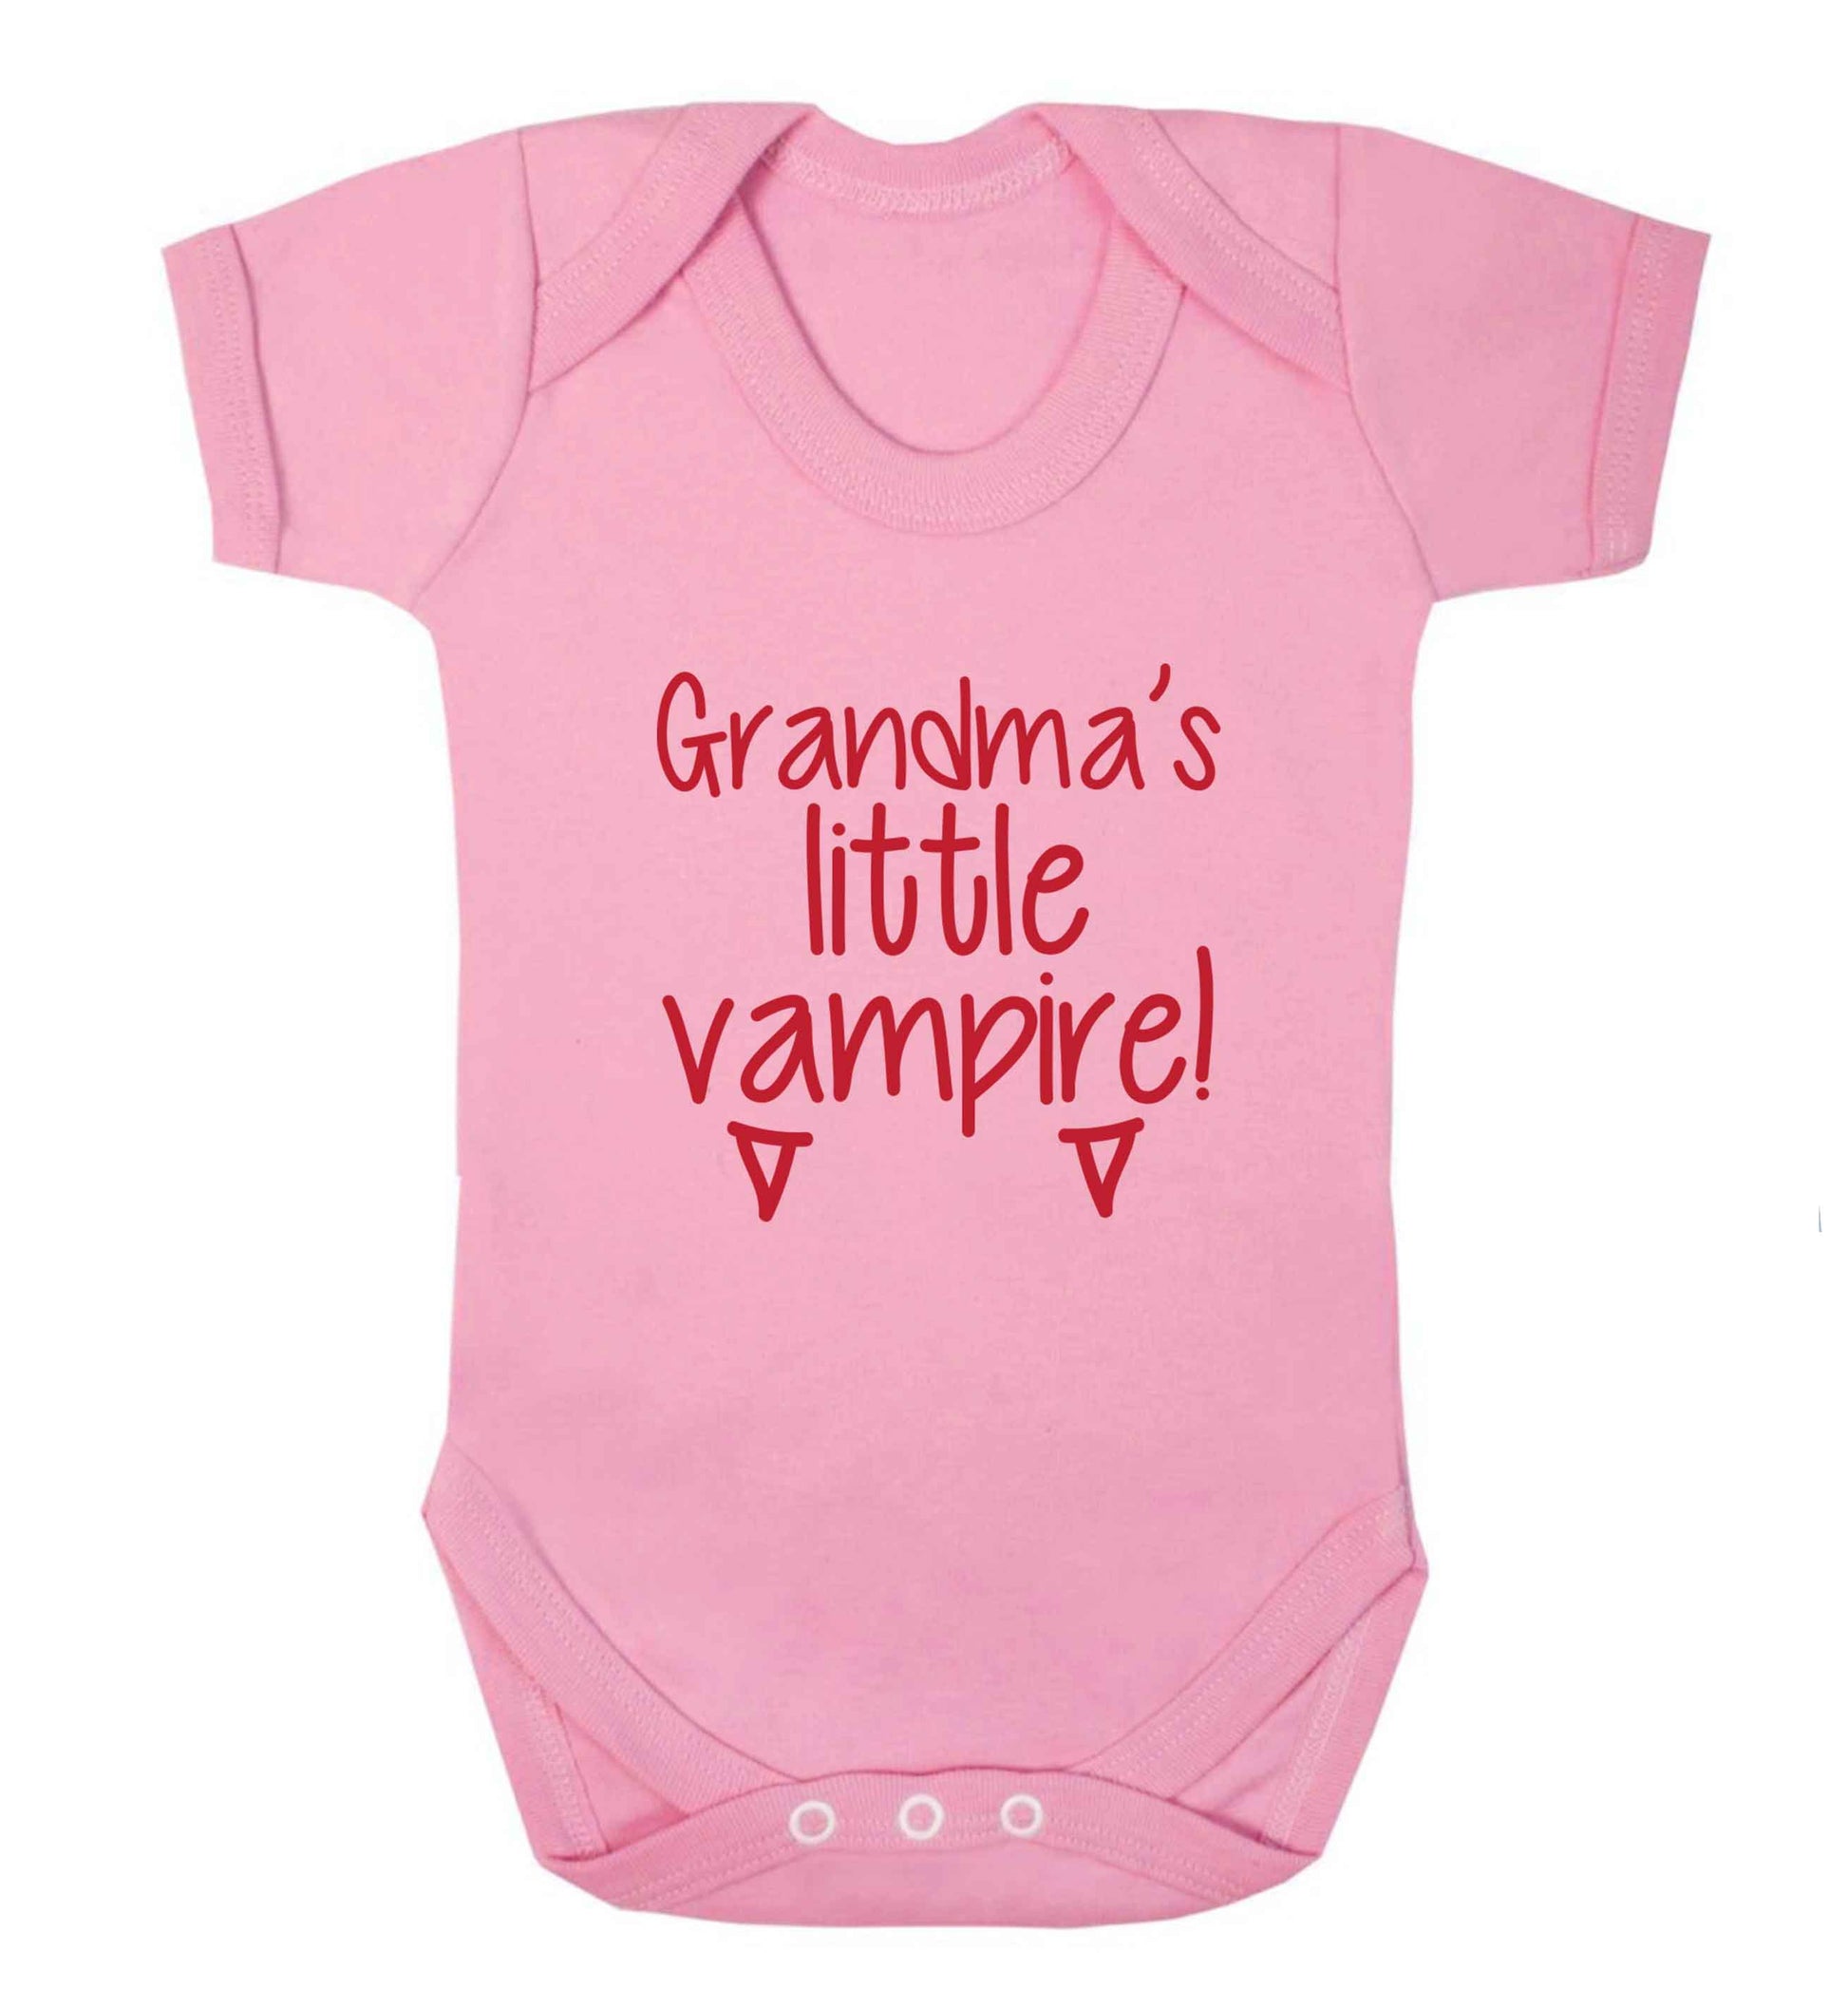 Grandma's little vampire baby vest pale pink 18-24 months